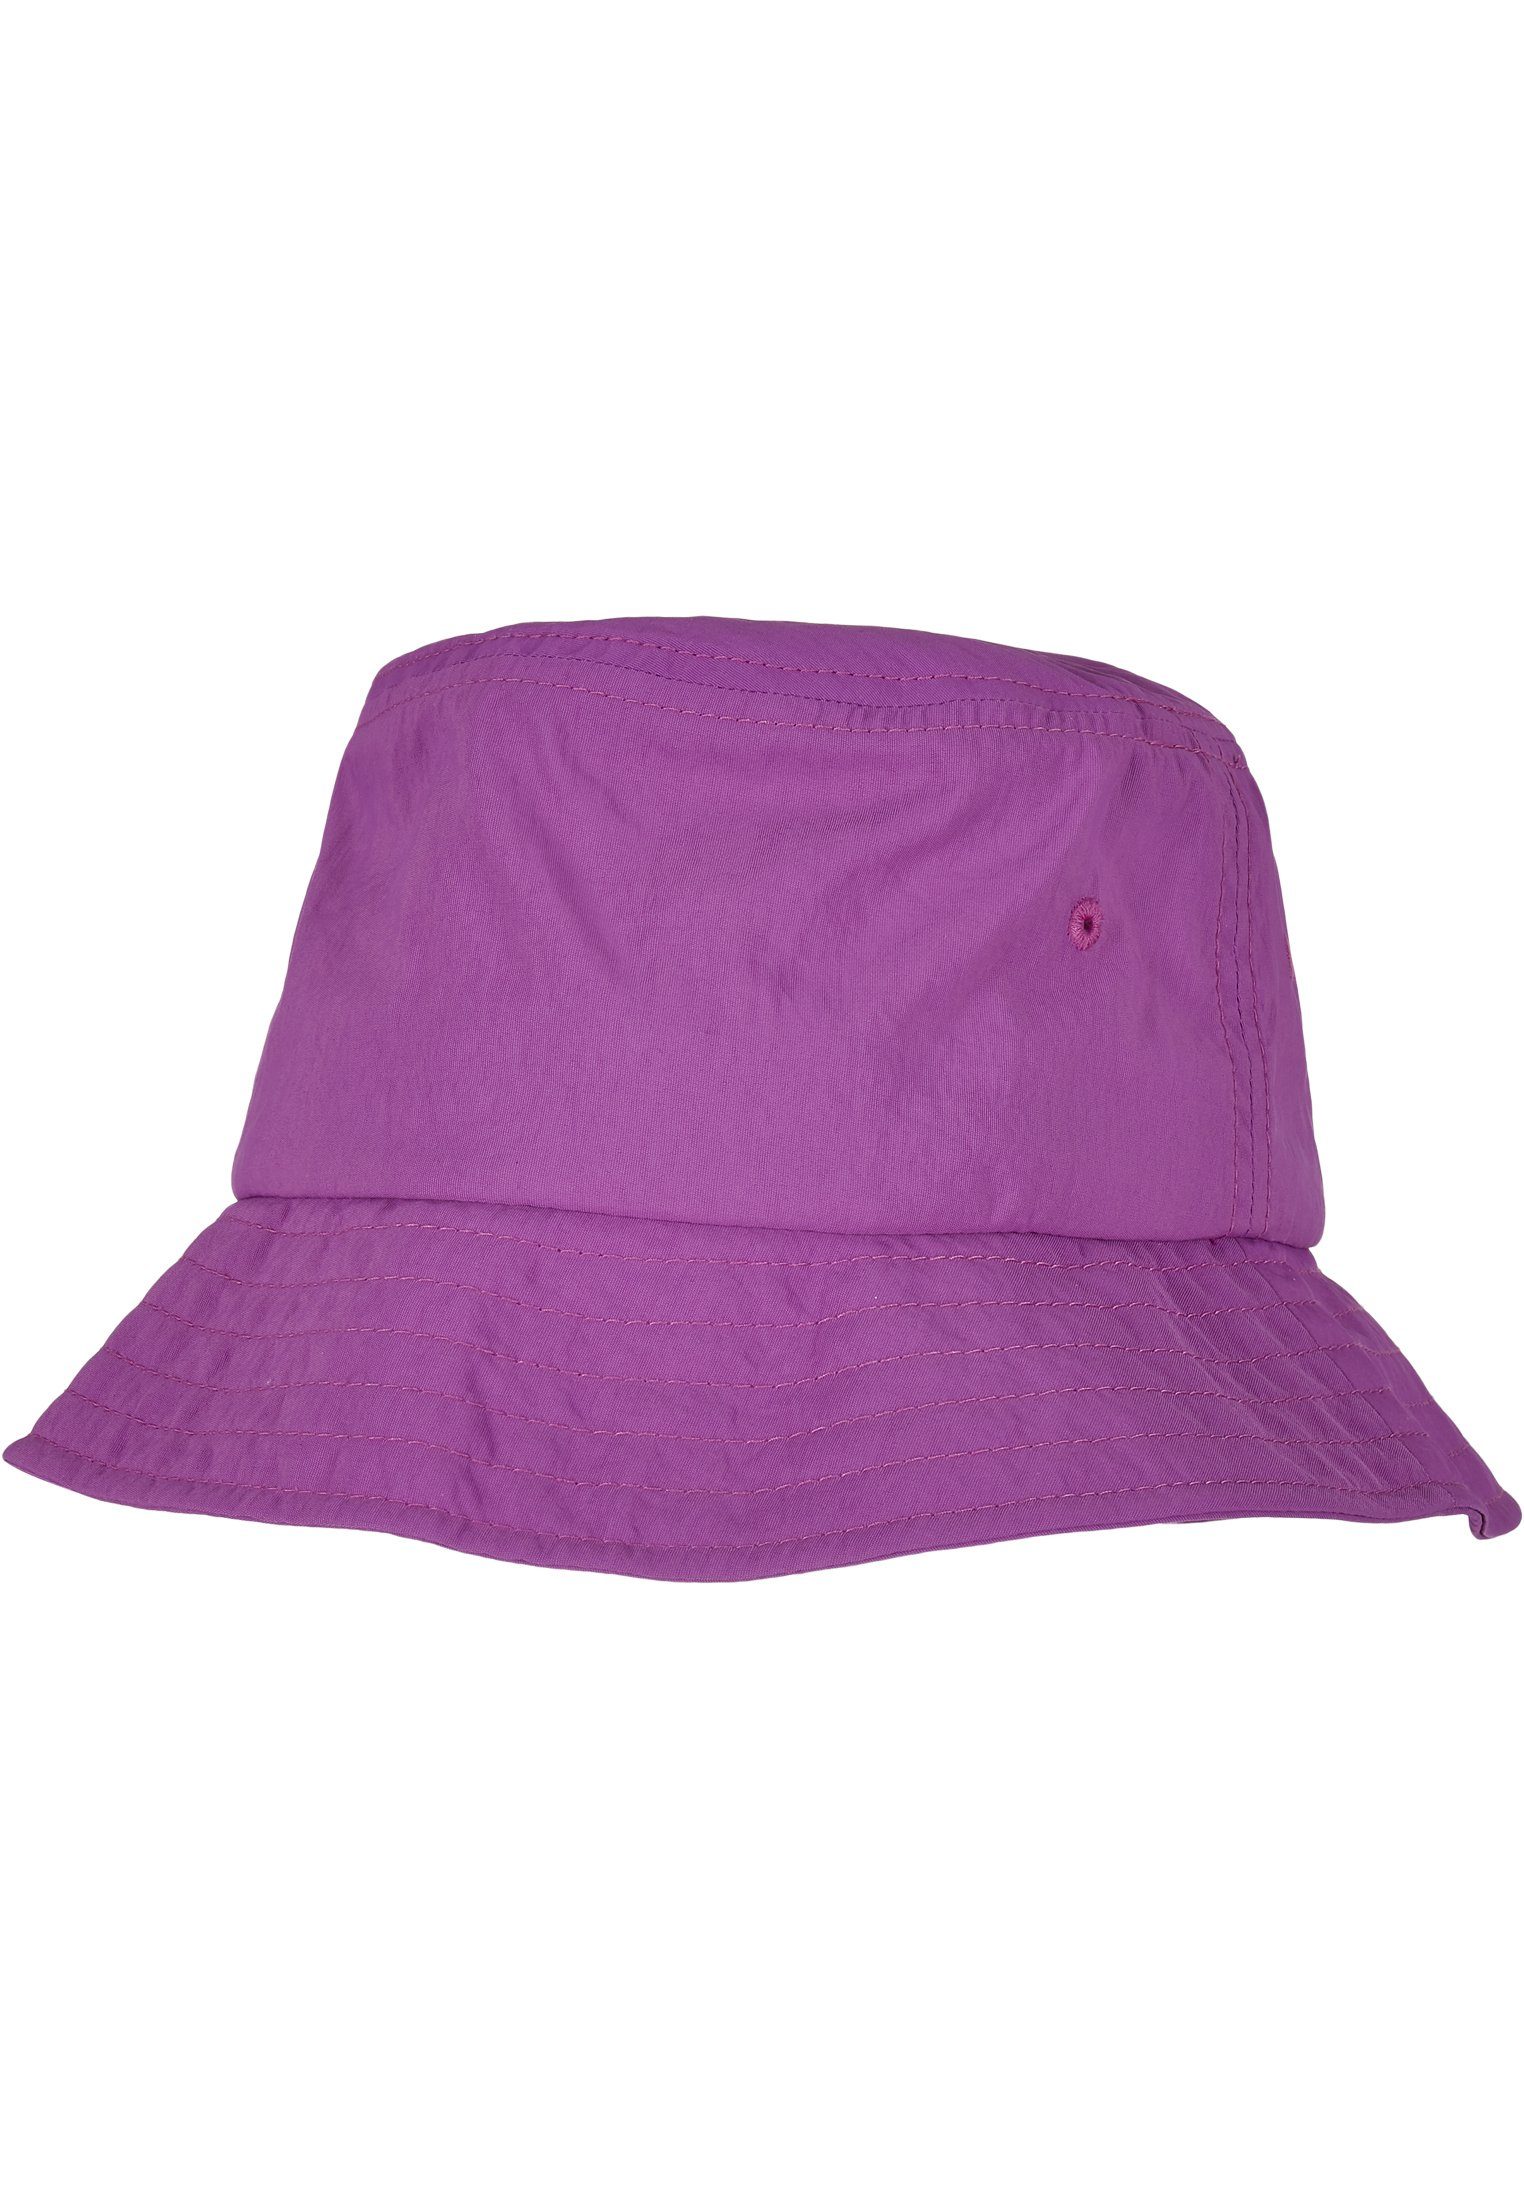 Cap Water Hat fuchsia Flex Flexfit Repellent Bucket Accessoires